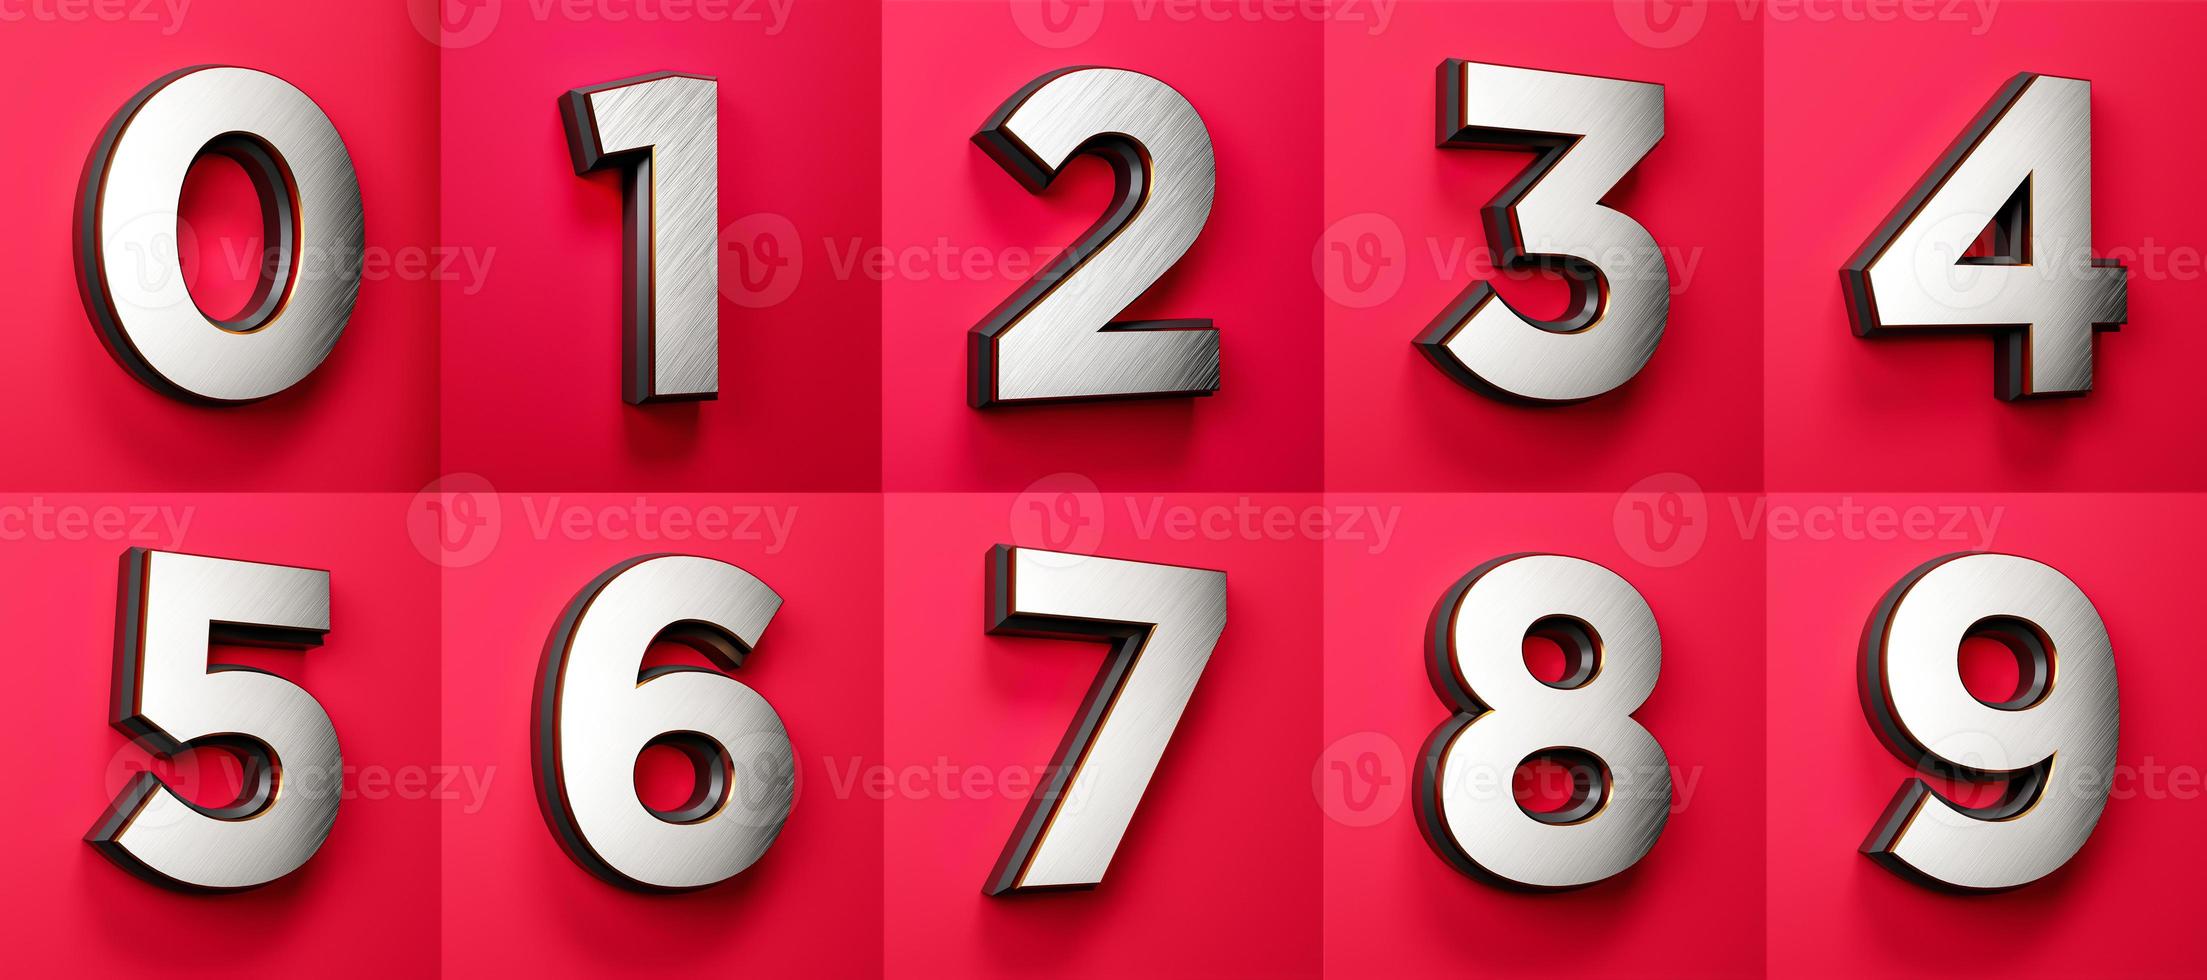 0, 1, 2, 3, 4, 5, 6, 7, 8, 9, números de lámina de plata blanca borde negro sobre un fondo rojo en representación 3d foto